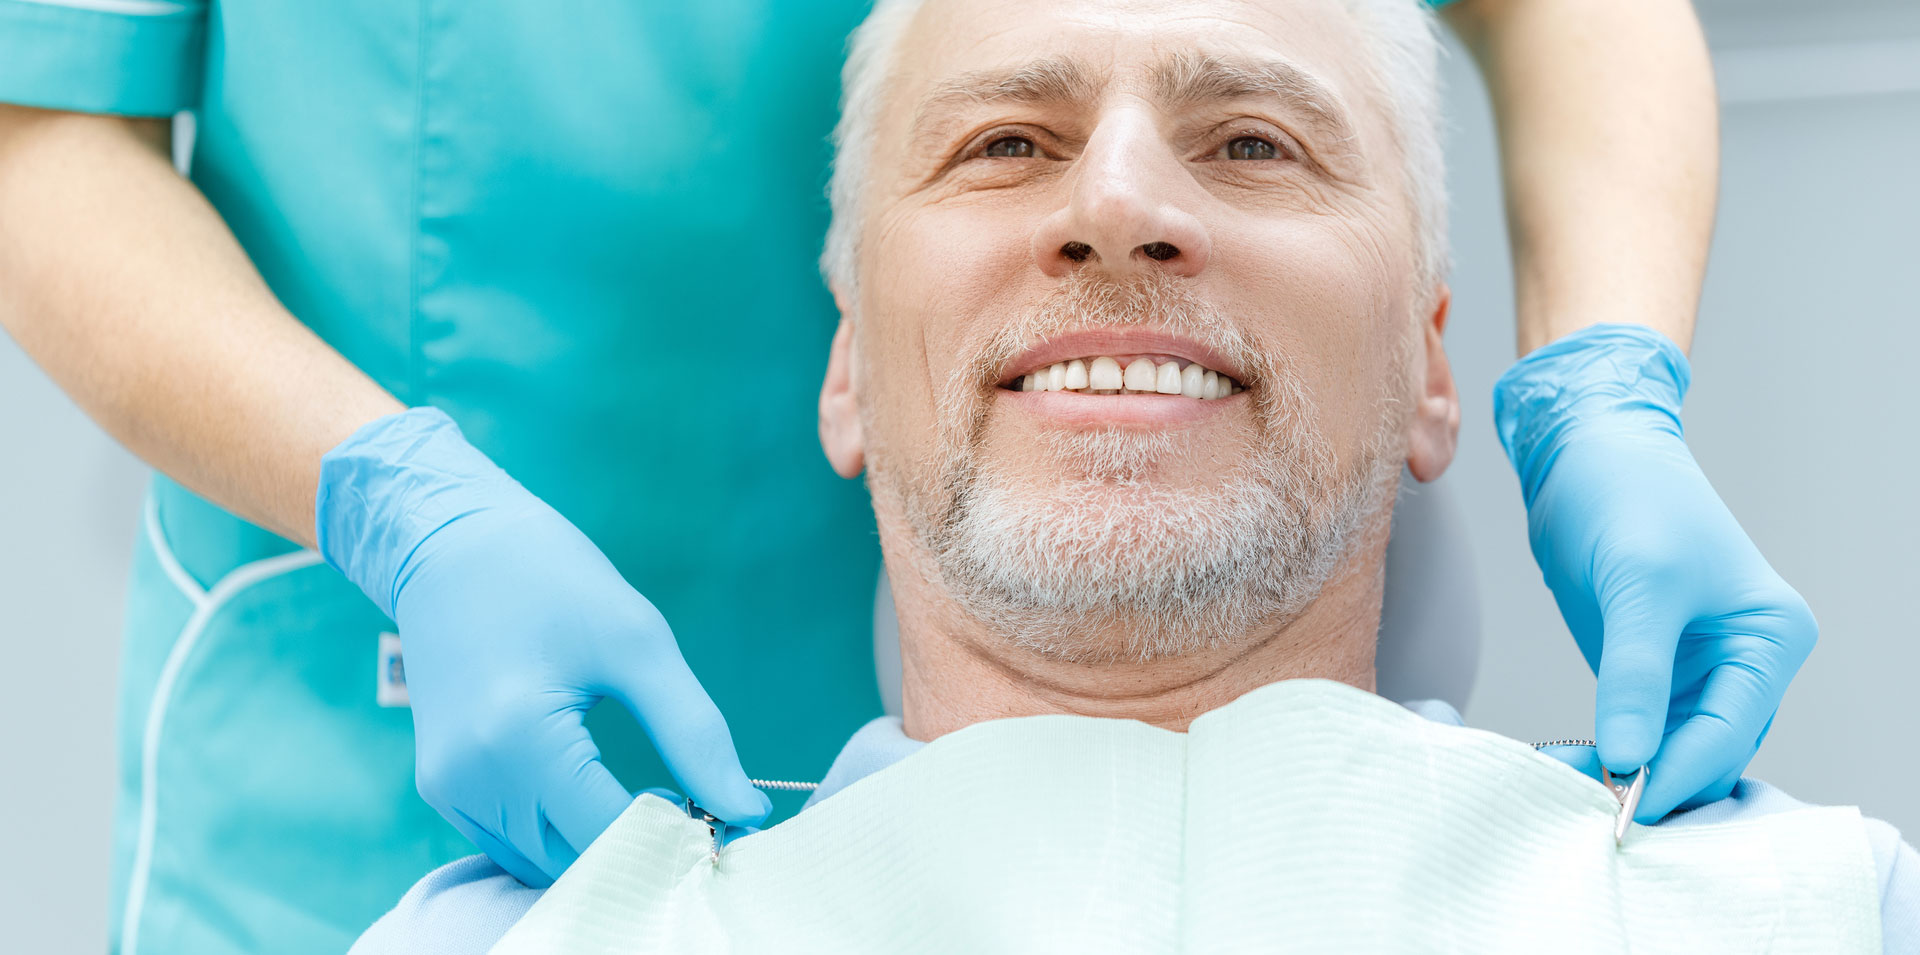 A man getting ready for dental implants treatment